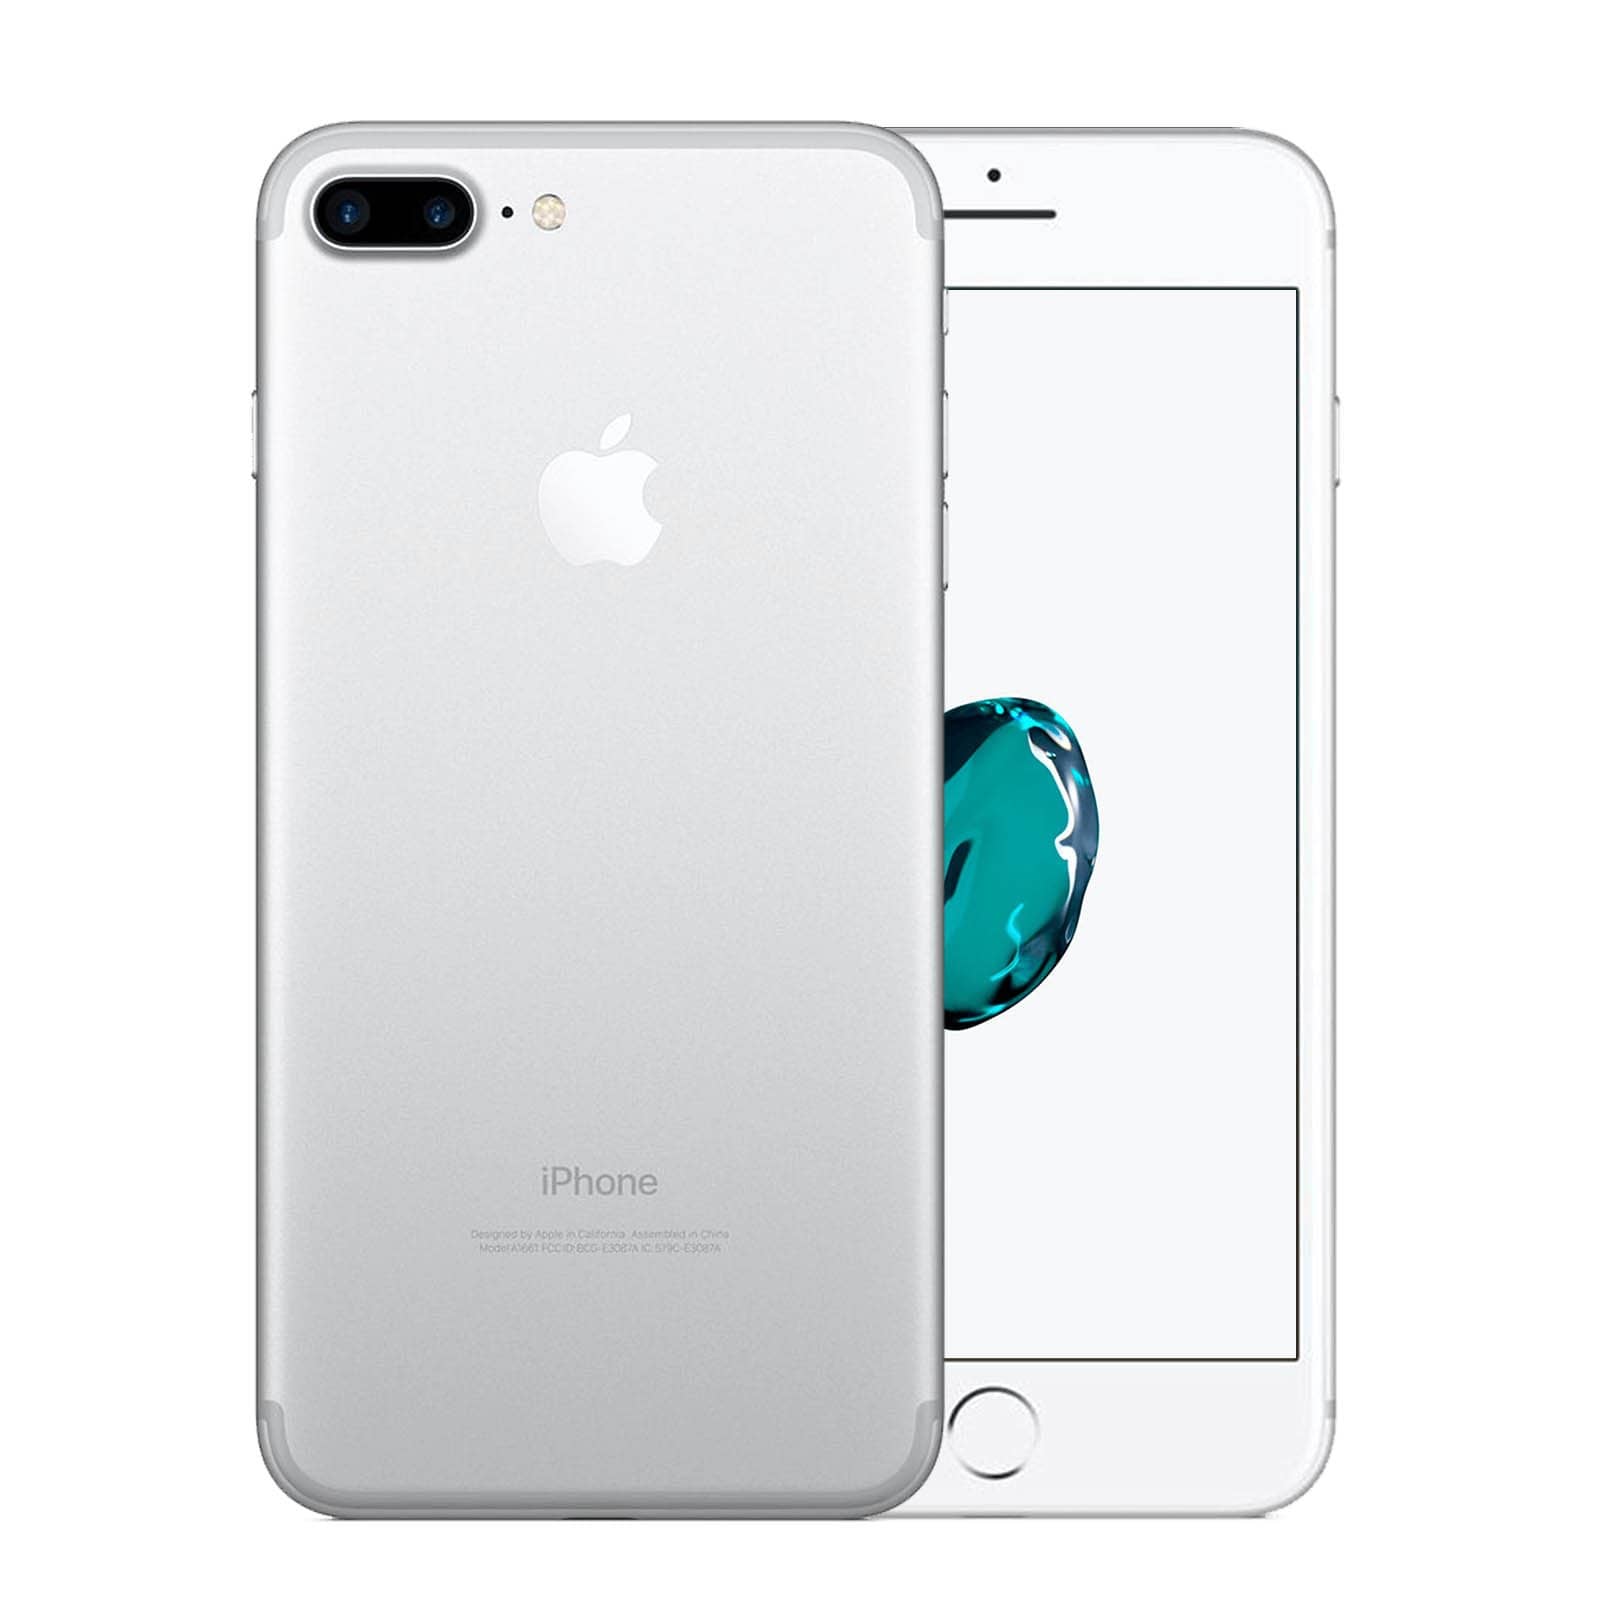 Apple iPhone 7 Plus 256GB Silver Very Good - Unlocked 256GB Silver Very Good